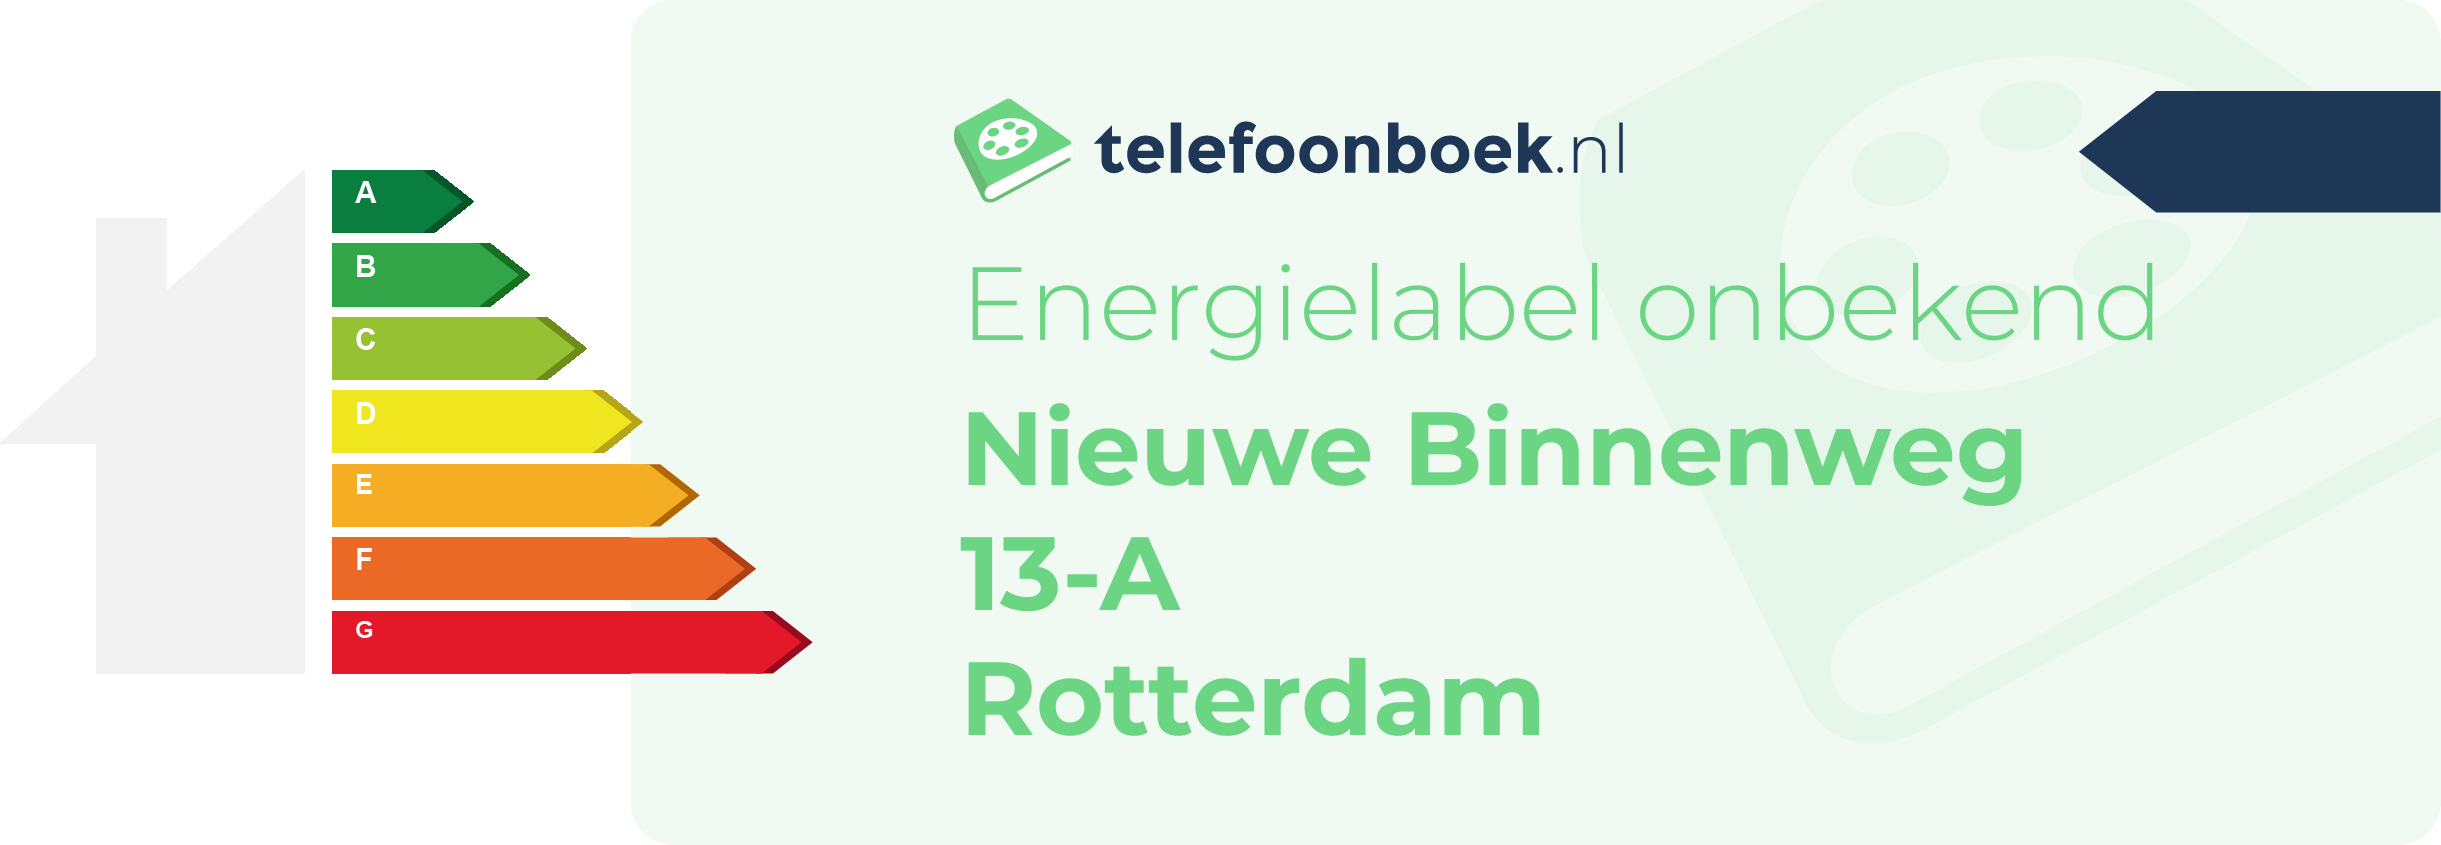 Energielabel Nieuwe Binnenweg 13-A Rotterdam